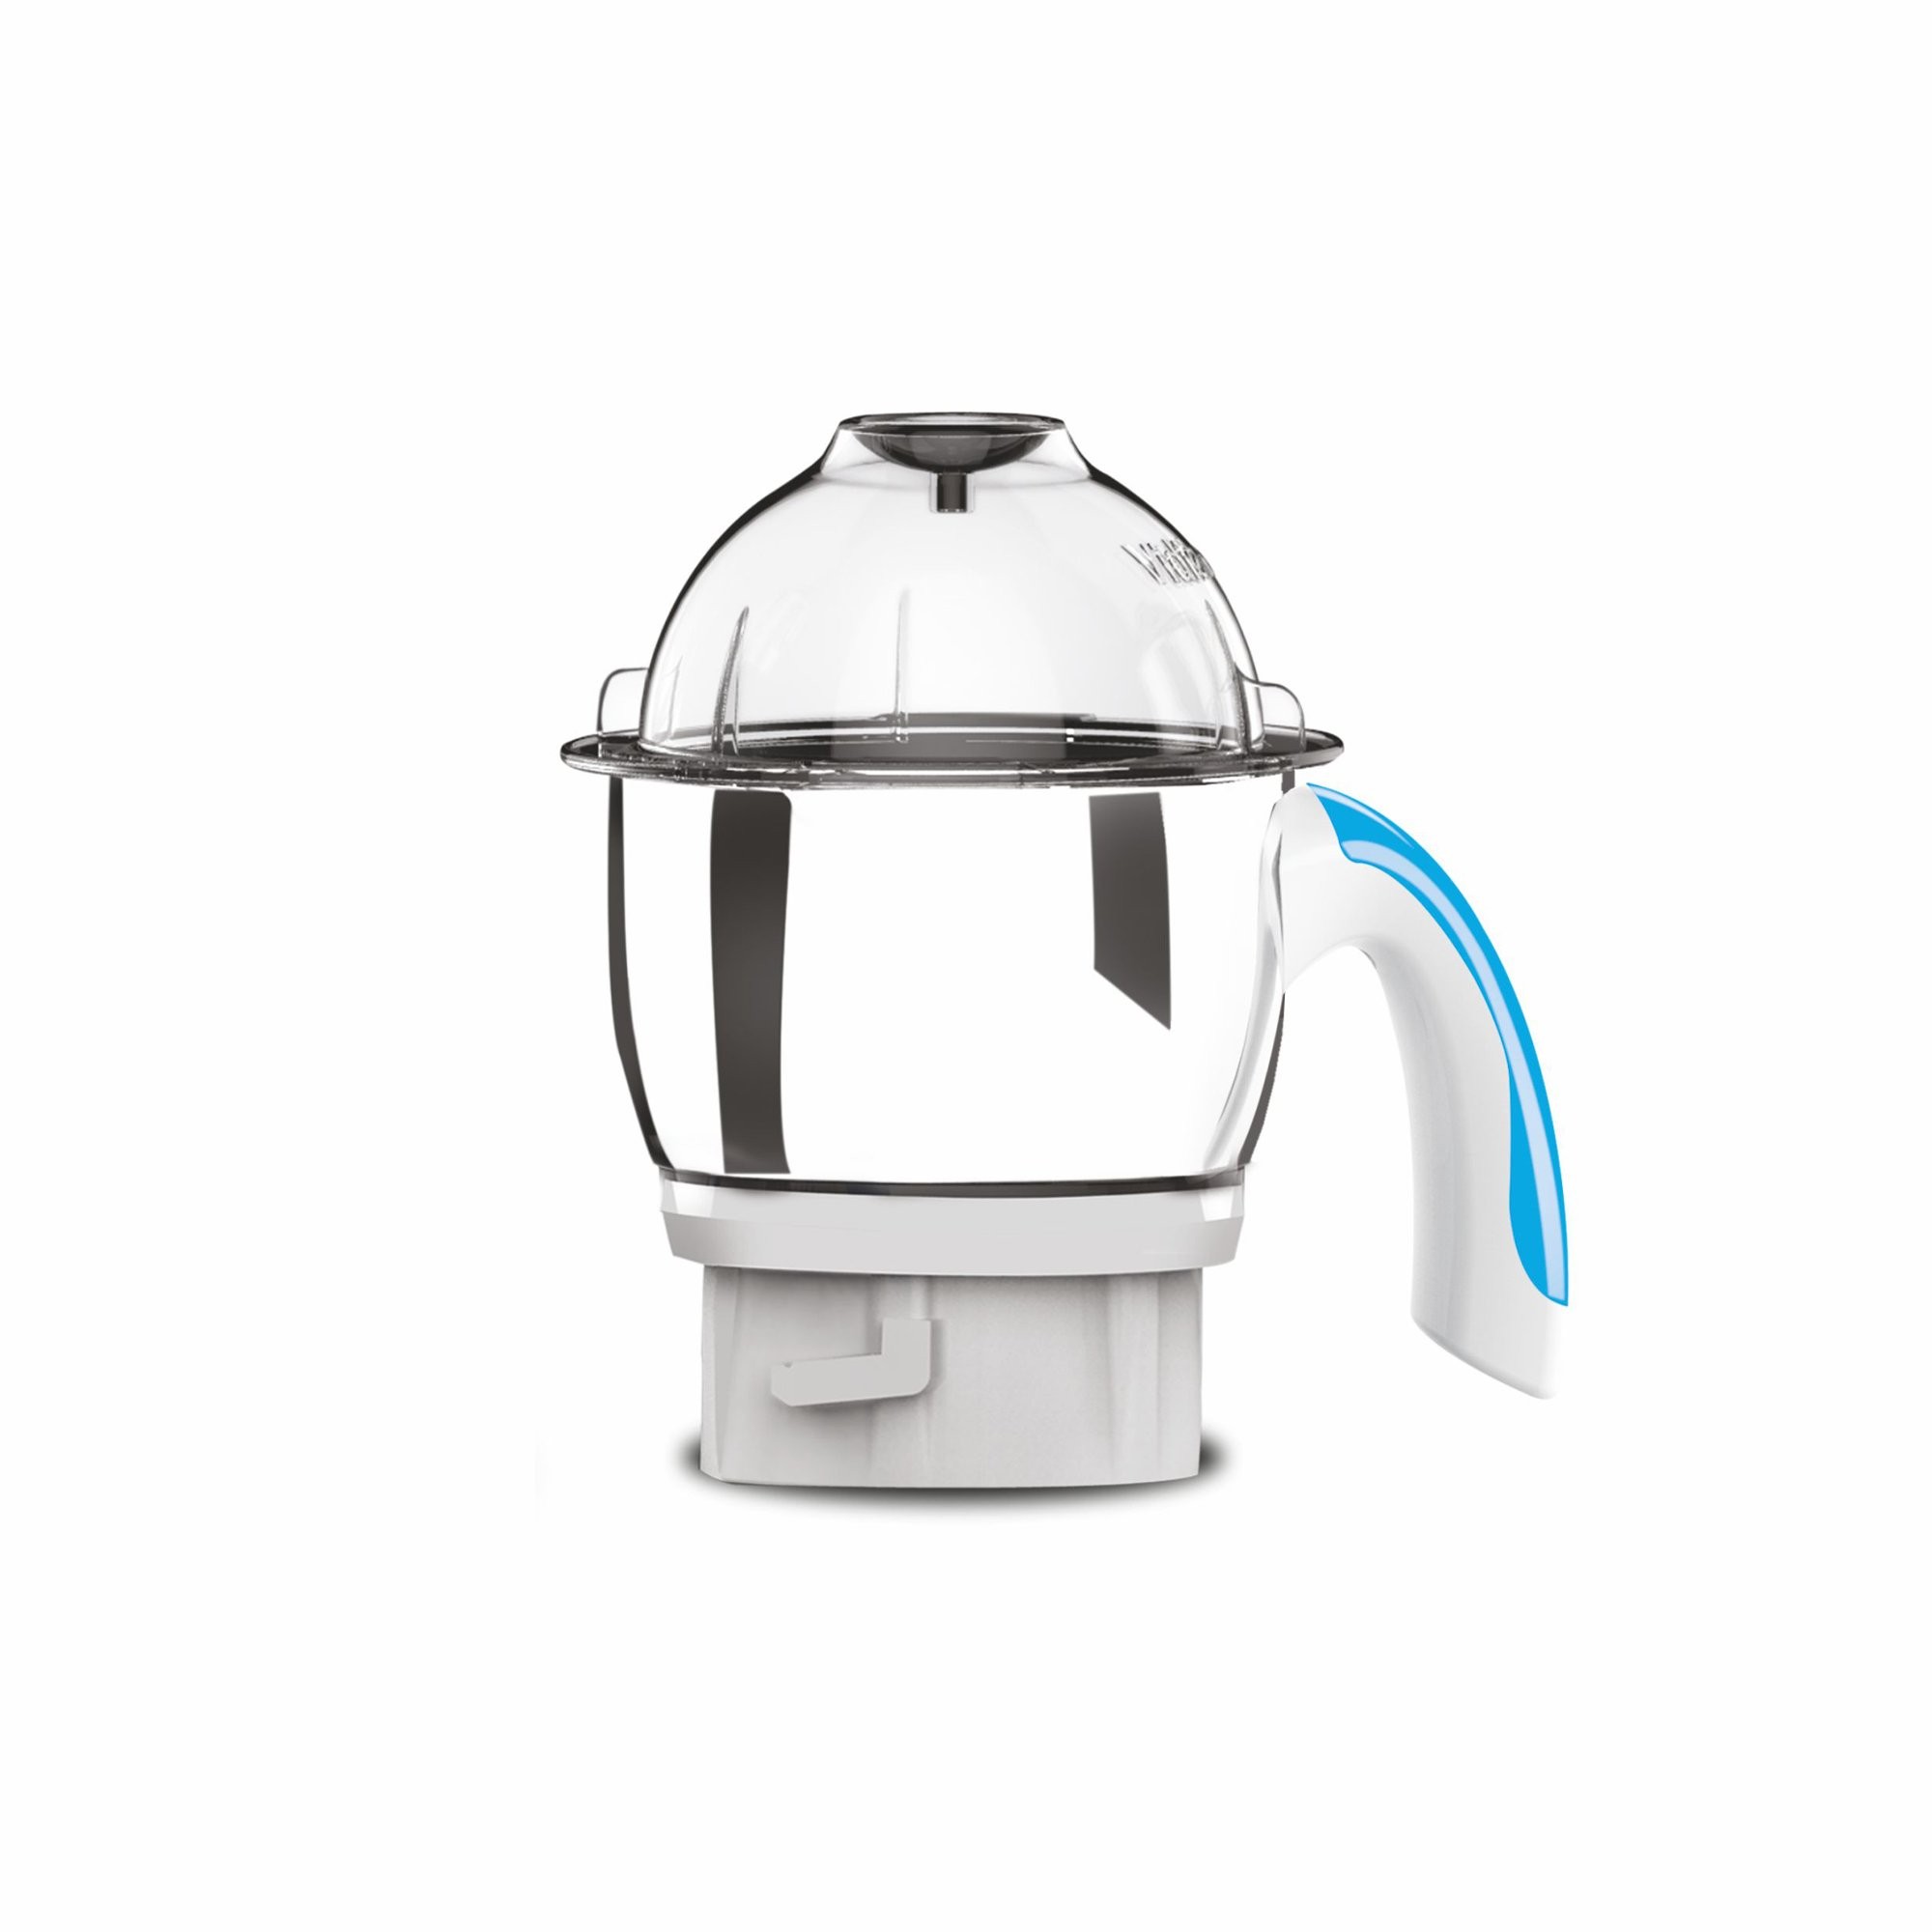 vidiem-versa-pride-750w-3-stainless-steel-jars-indian-mixer-grinder-spice-coffee-grinder-jar-110v-for-use-in-canada-usa6